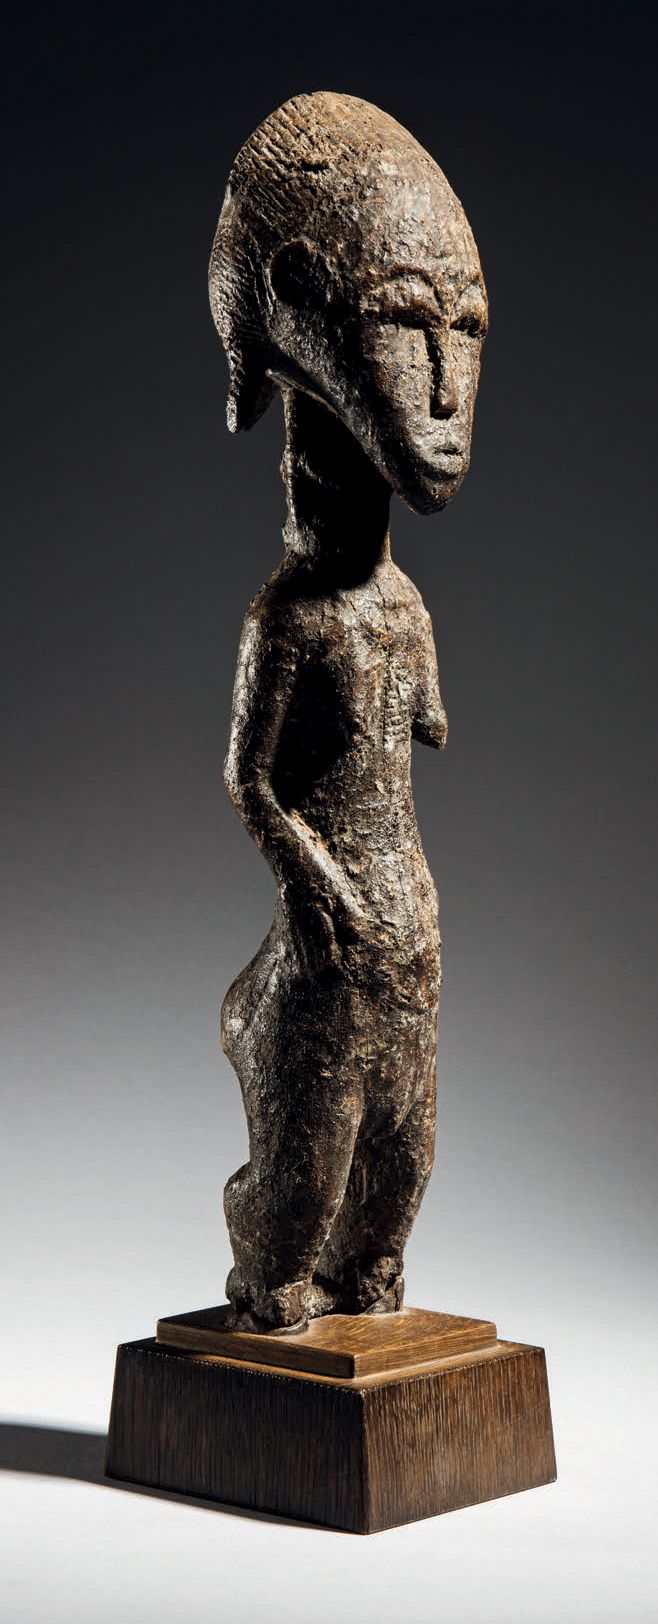 Null - 象牙海岸Baule雕像
木头
H.39厘米
表现一个表情敏感的女性形象，头部装饰有三条辫子的头饰，双手放在臀部，整个身体覆盖着厚厚的祭祀用铜板。